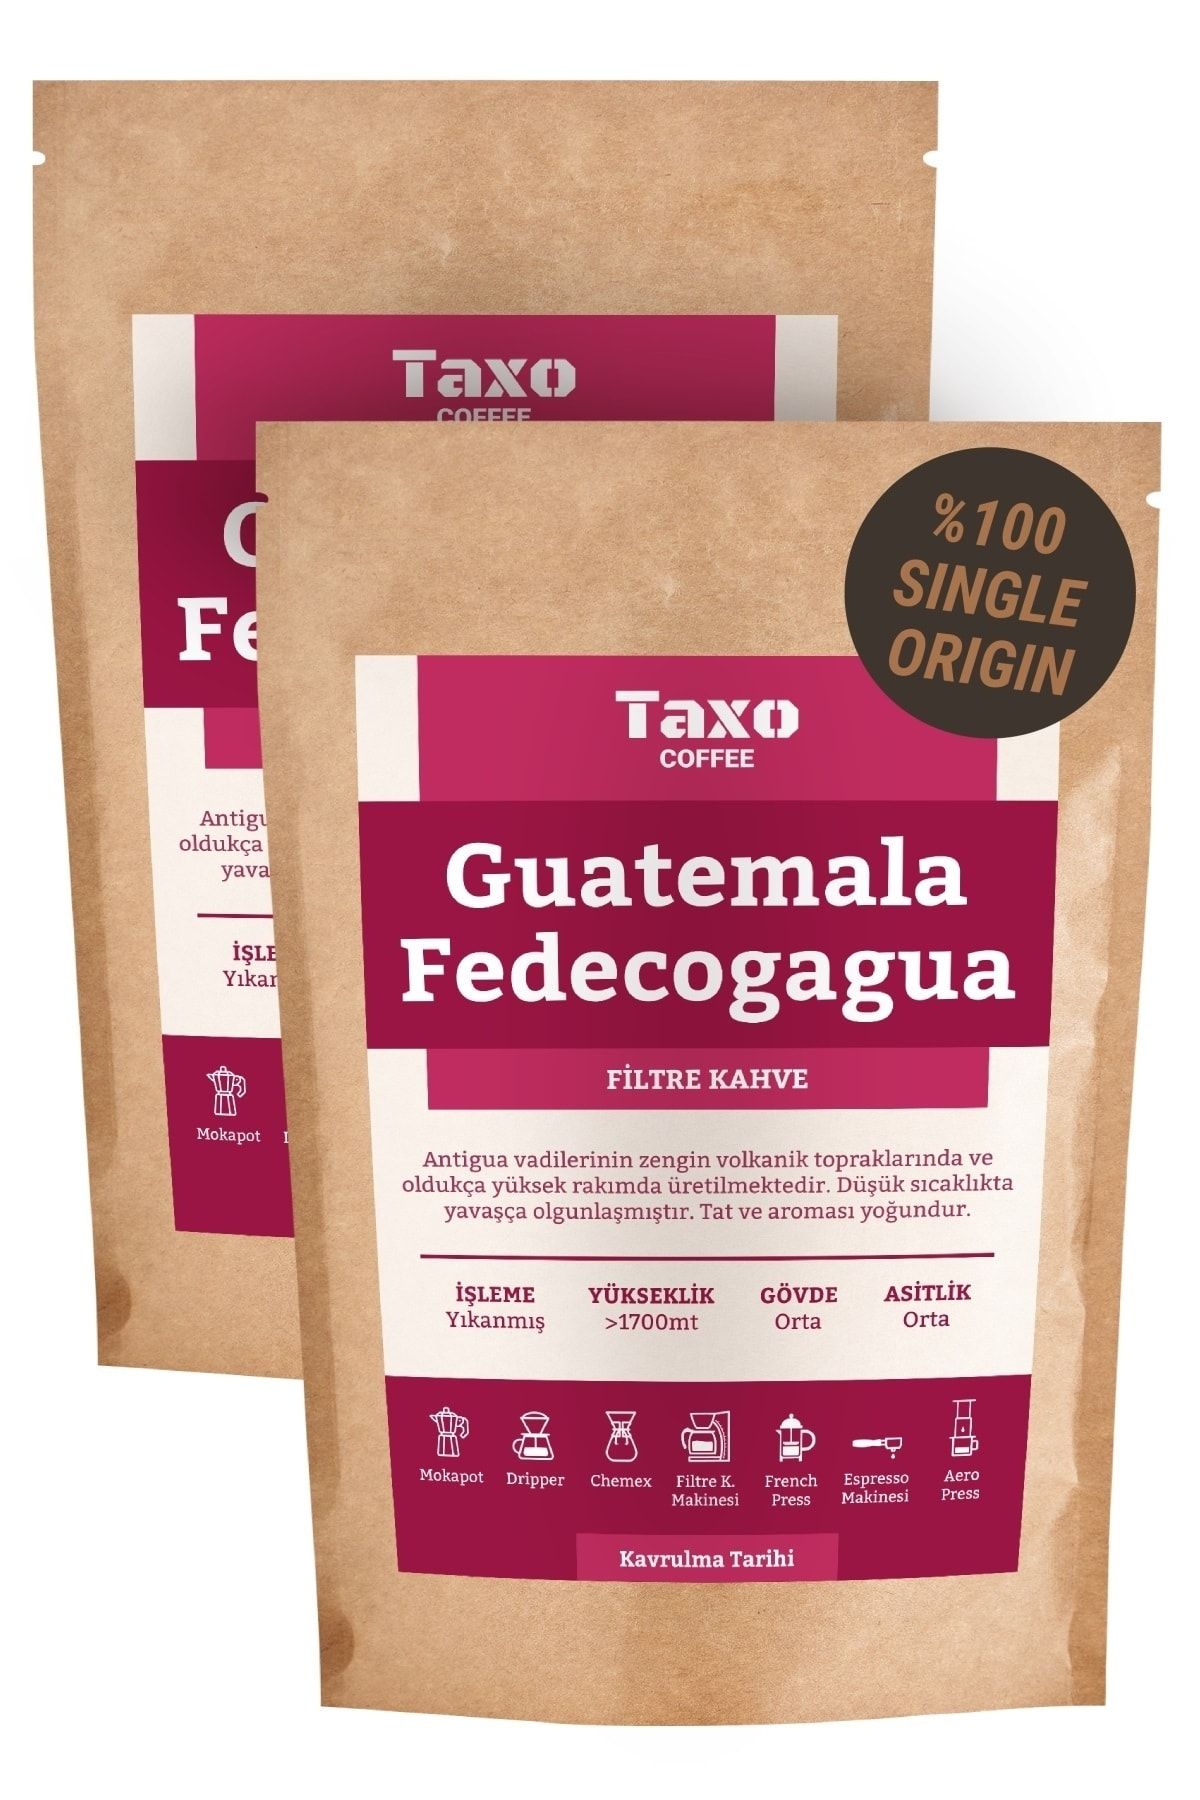 Taxo Coffee Guatemala Fedecogagua Filtre Kahve 1kg